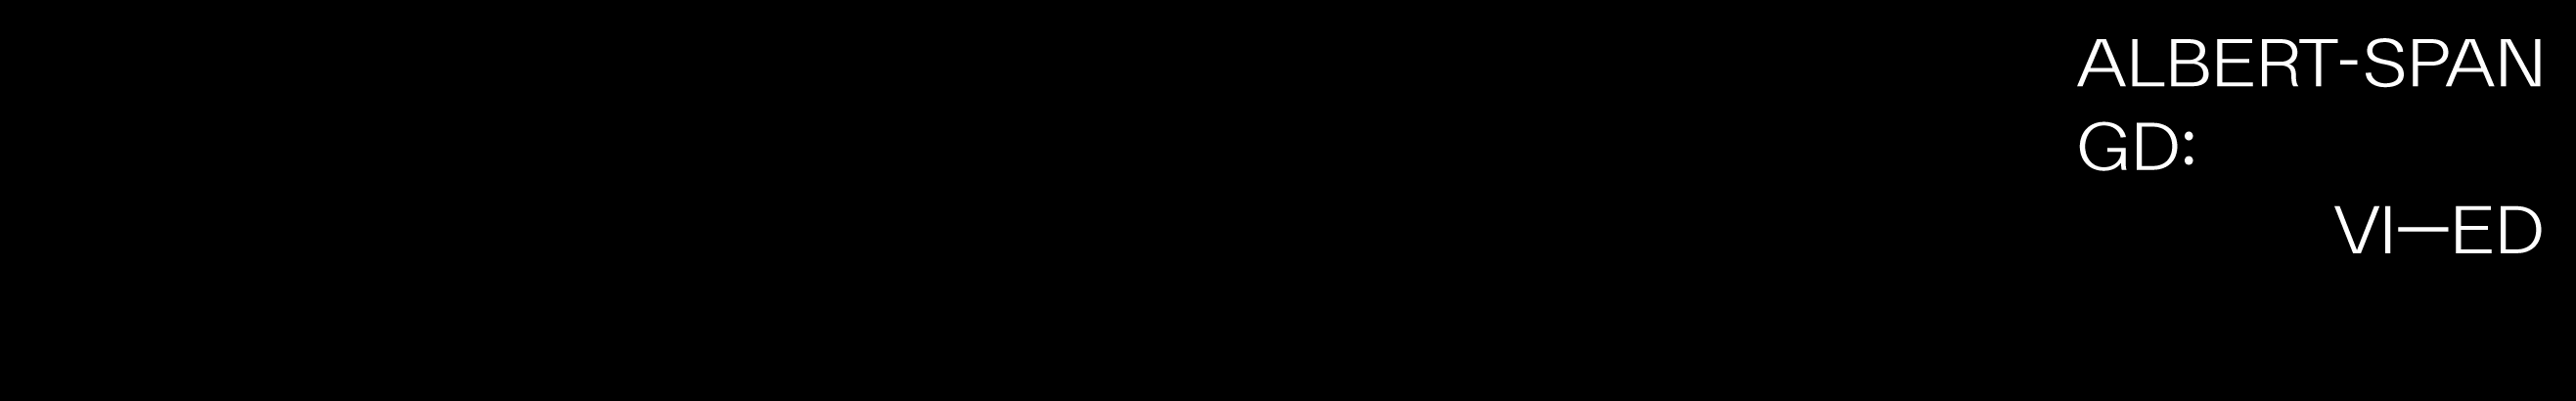 Albert Span's profile banner